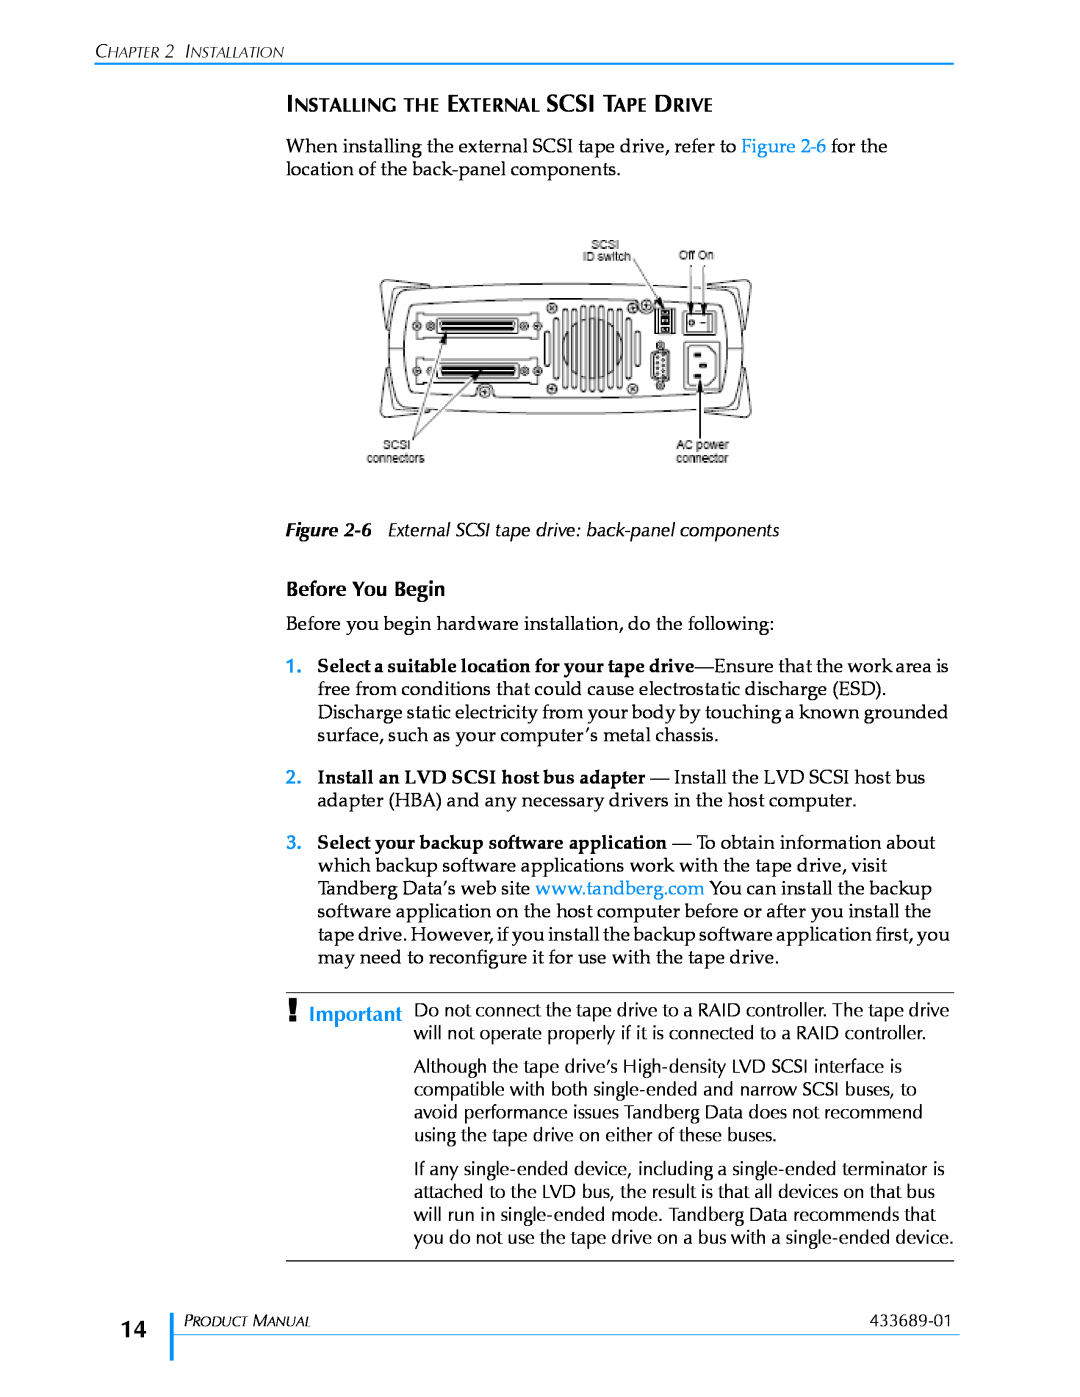 Tandberg Data VXA-320 (VXA-3) manual Before You Begin, Installing The External Scsi Tape Drive 